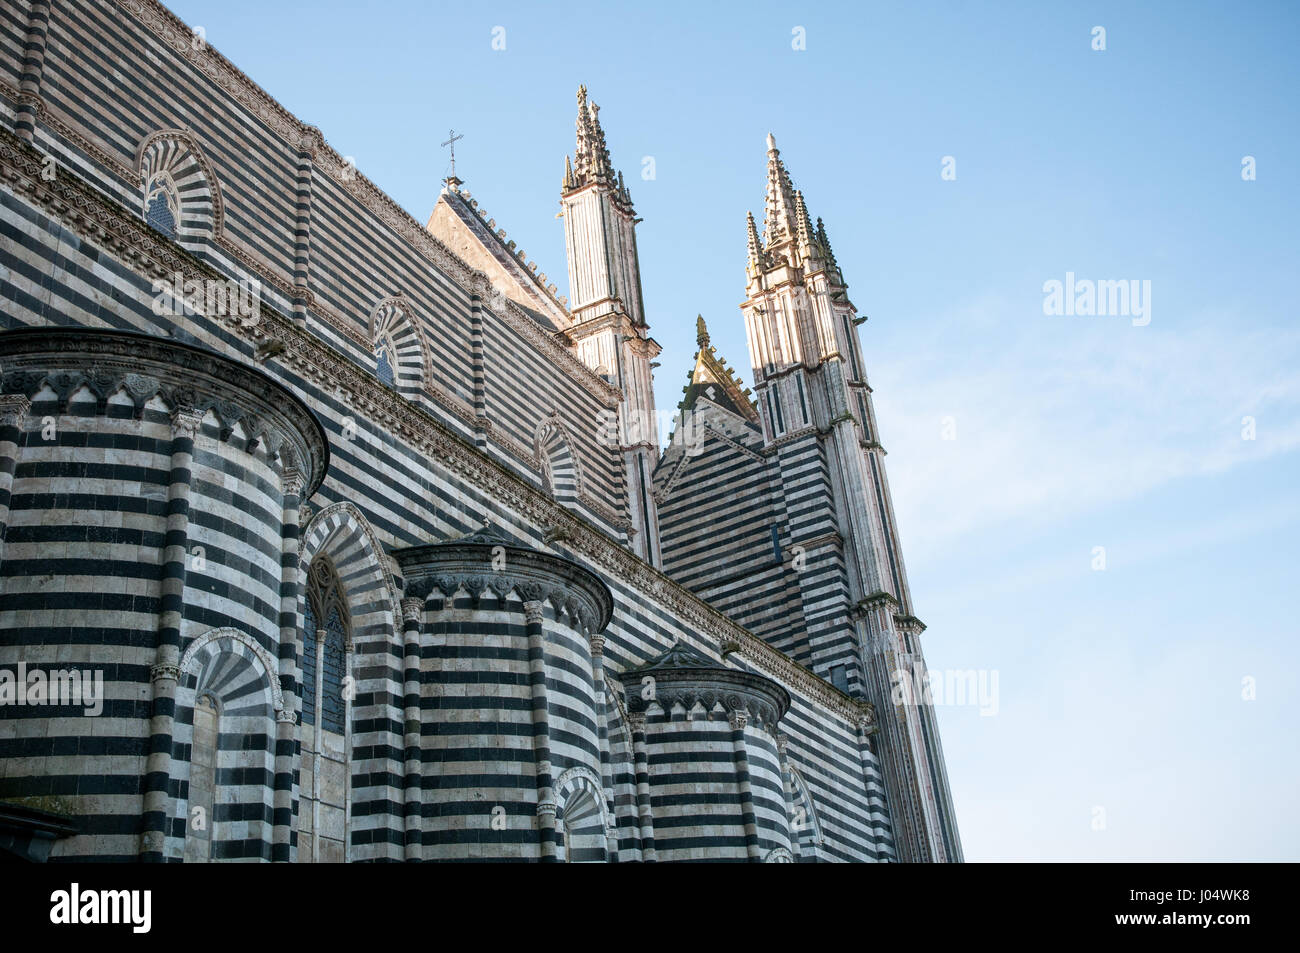 Oriveto Cathedral, Italy, Europe Stock Photo